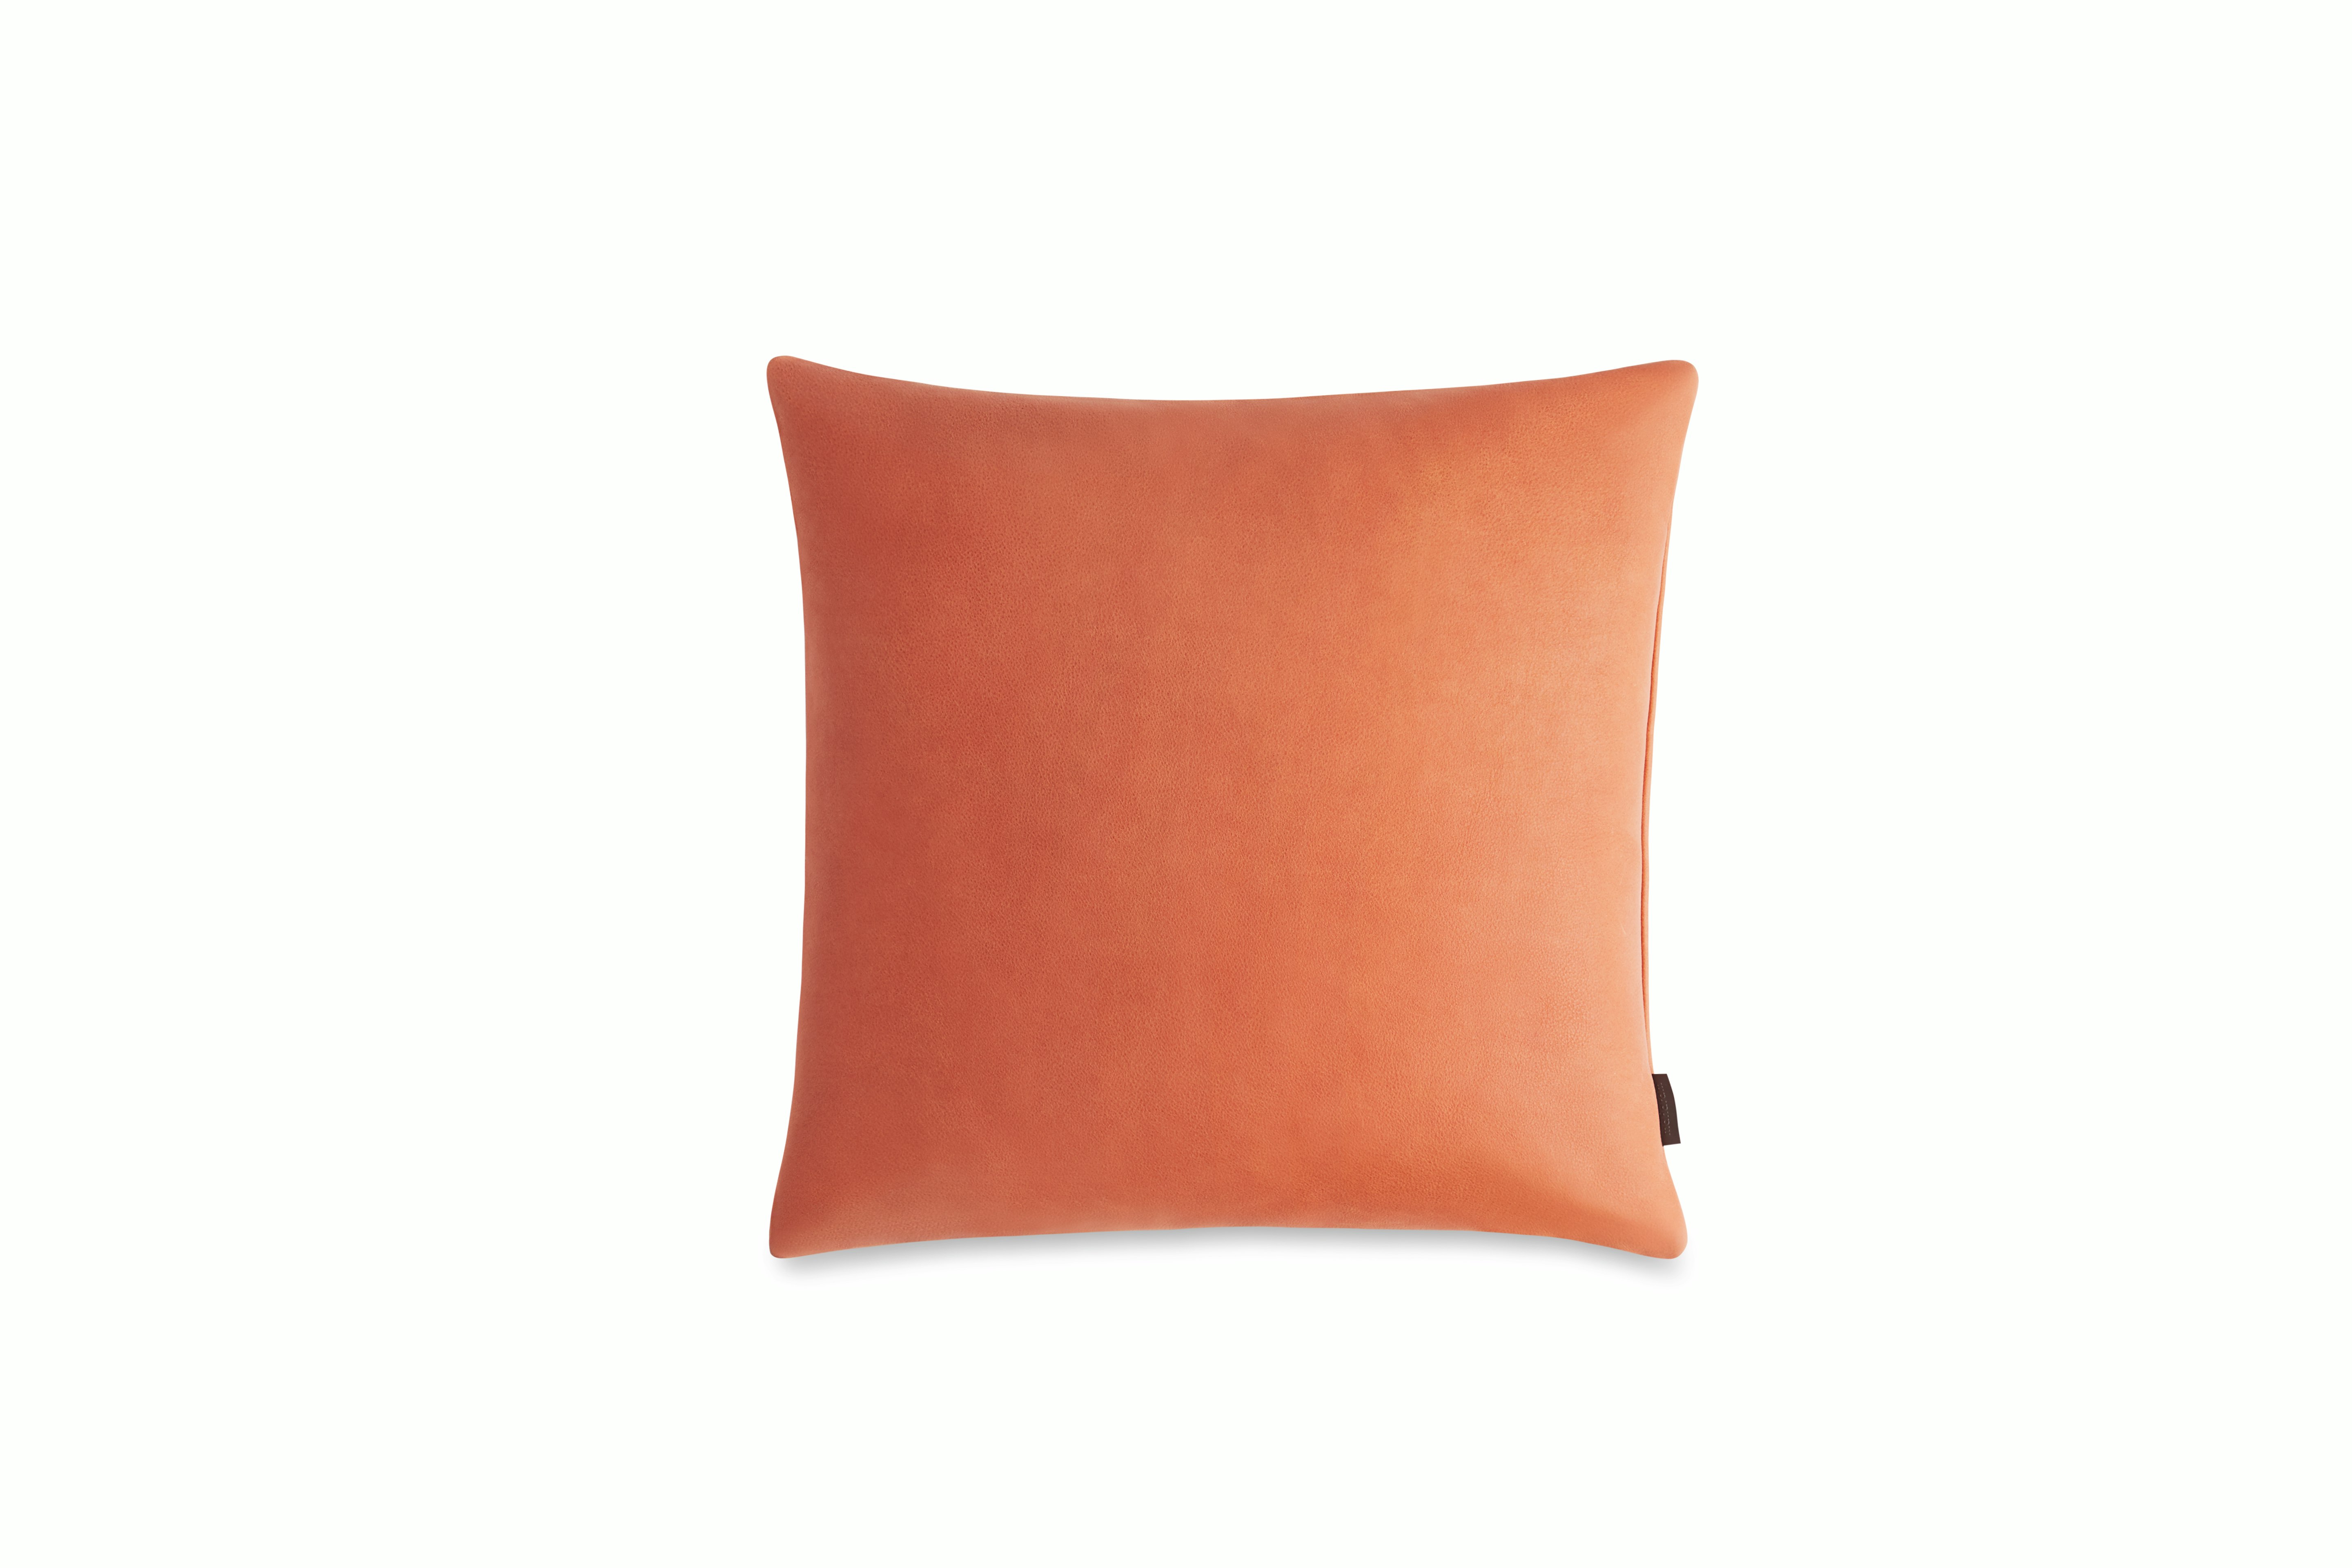 design within reach pillows